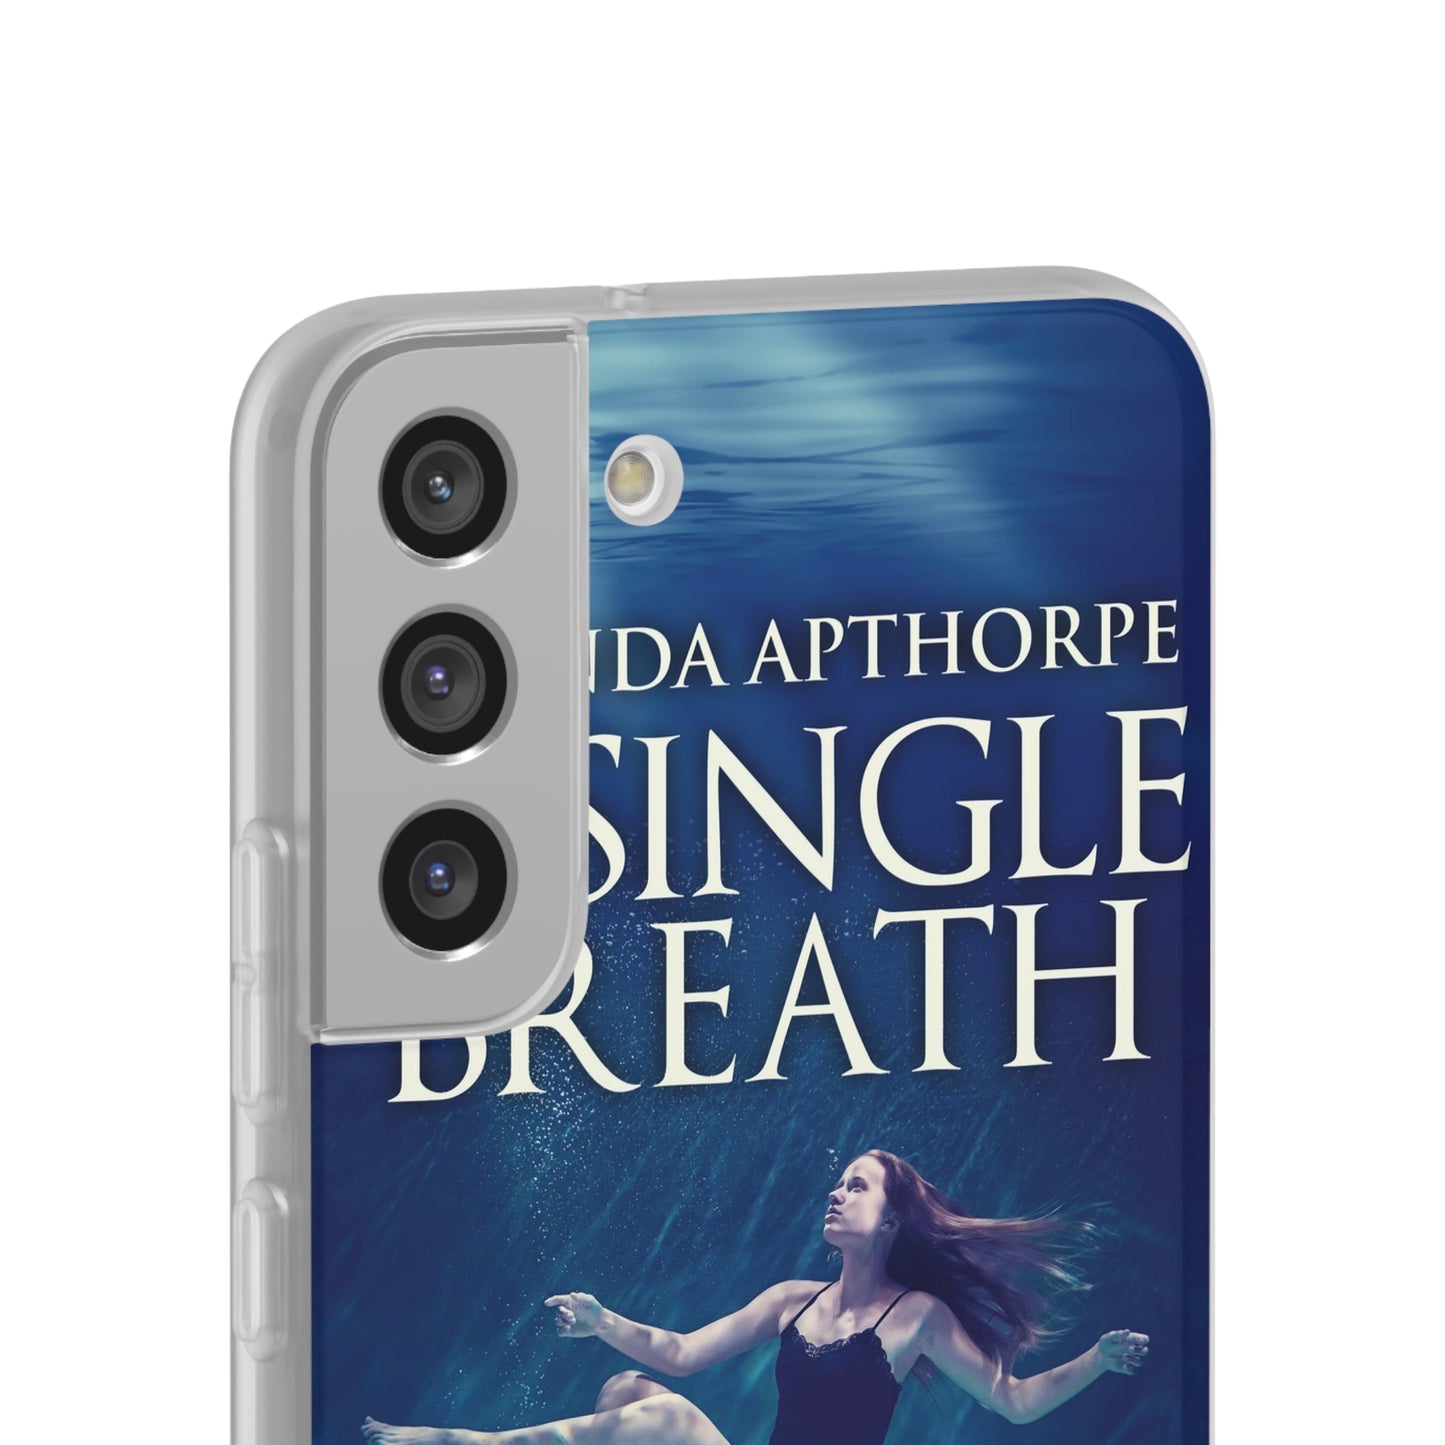 A Single Breath - Flexible Phone Case